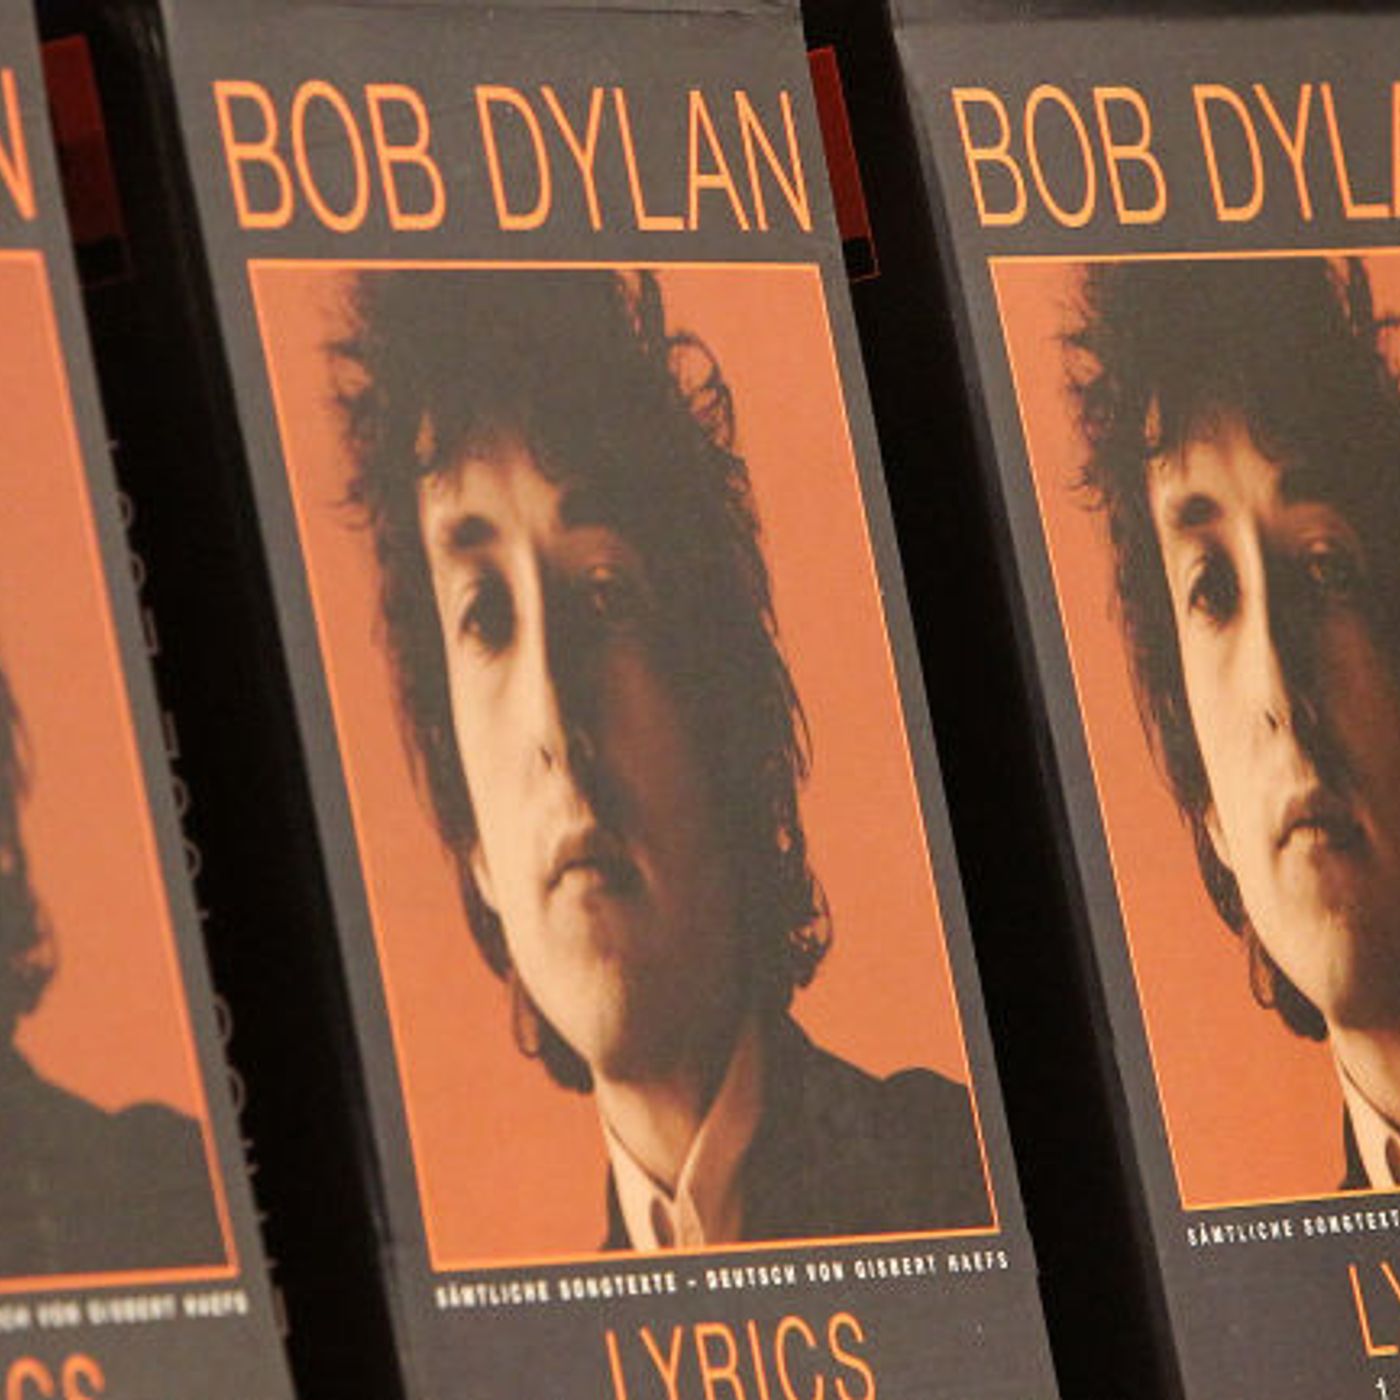 Happy 80th birthday, Bob Dylan